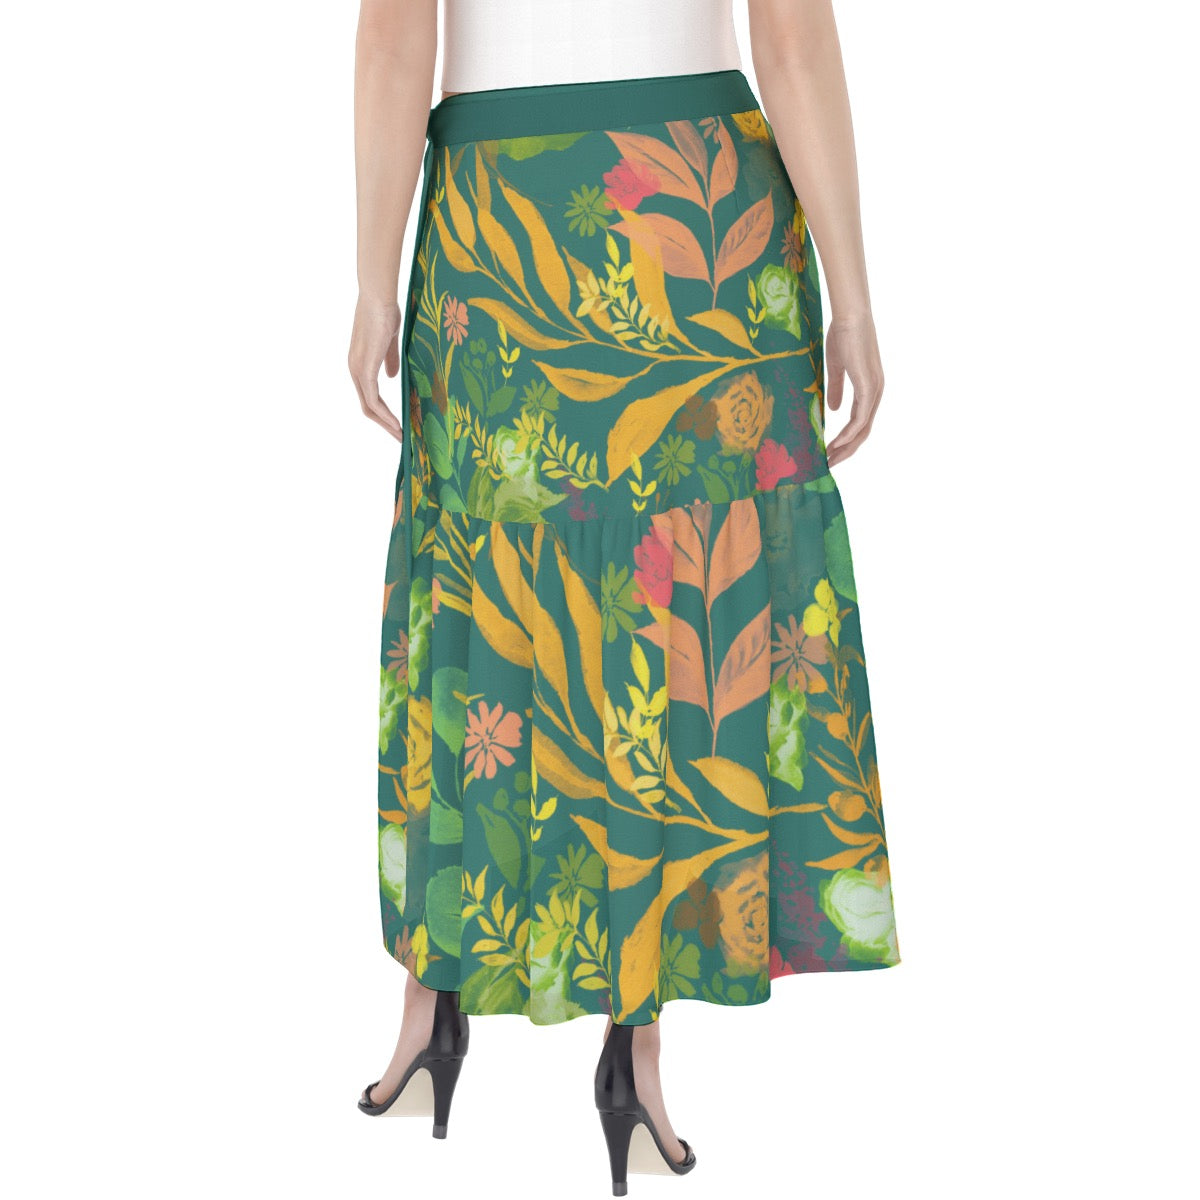 Multicolor Flowers Green Women's Wrap Skirt. Design hand-painted by the Designer Maria Alejandra Echenique